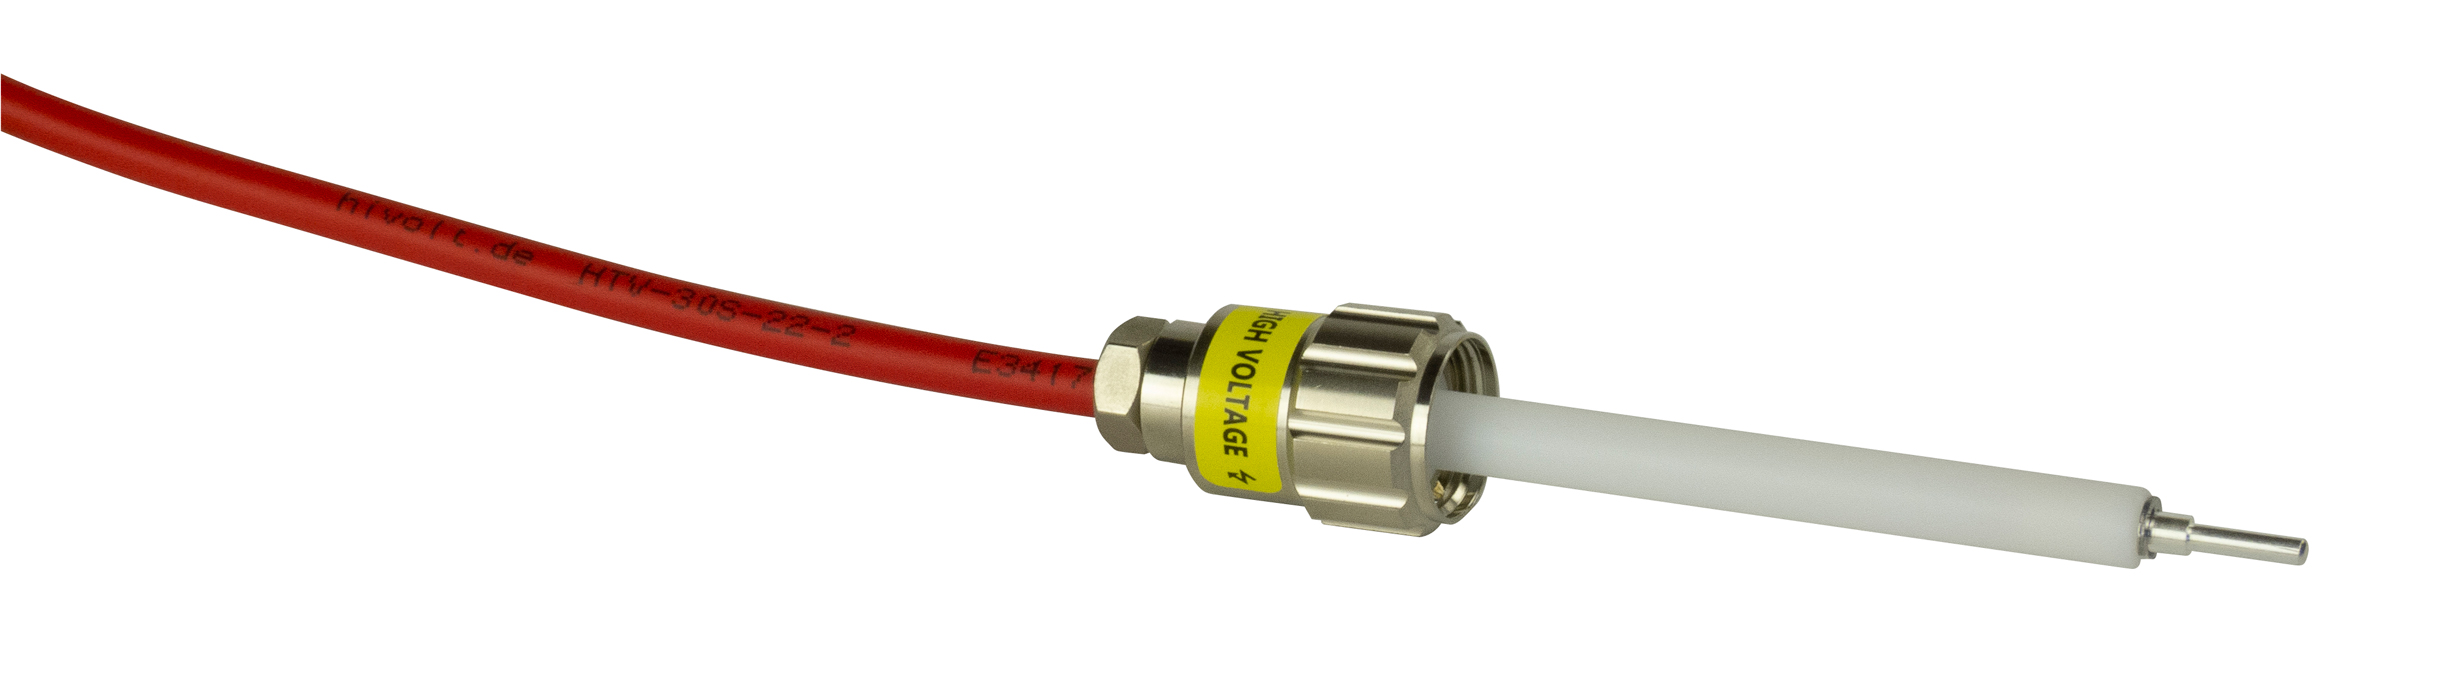 High voltage connector GES HS-HB series plug and socket, 10 kV to 40 kV